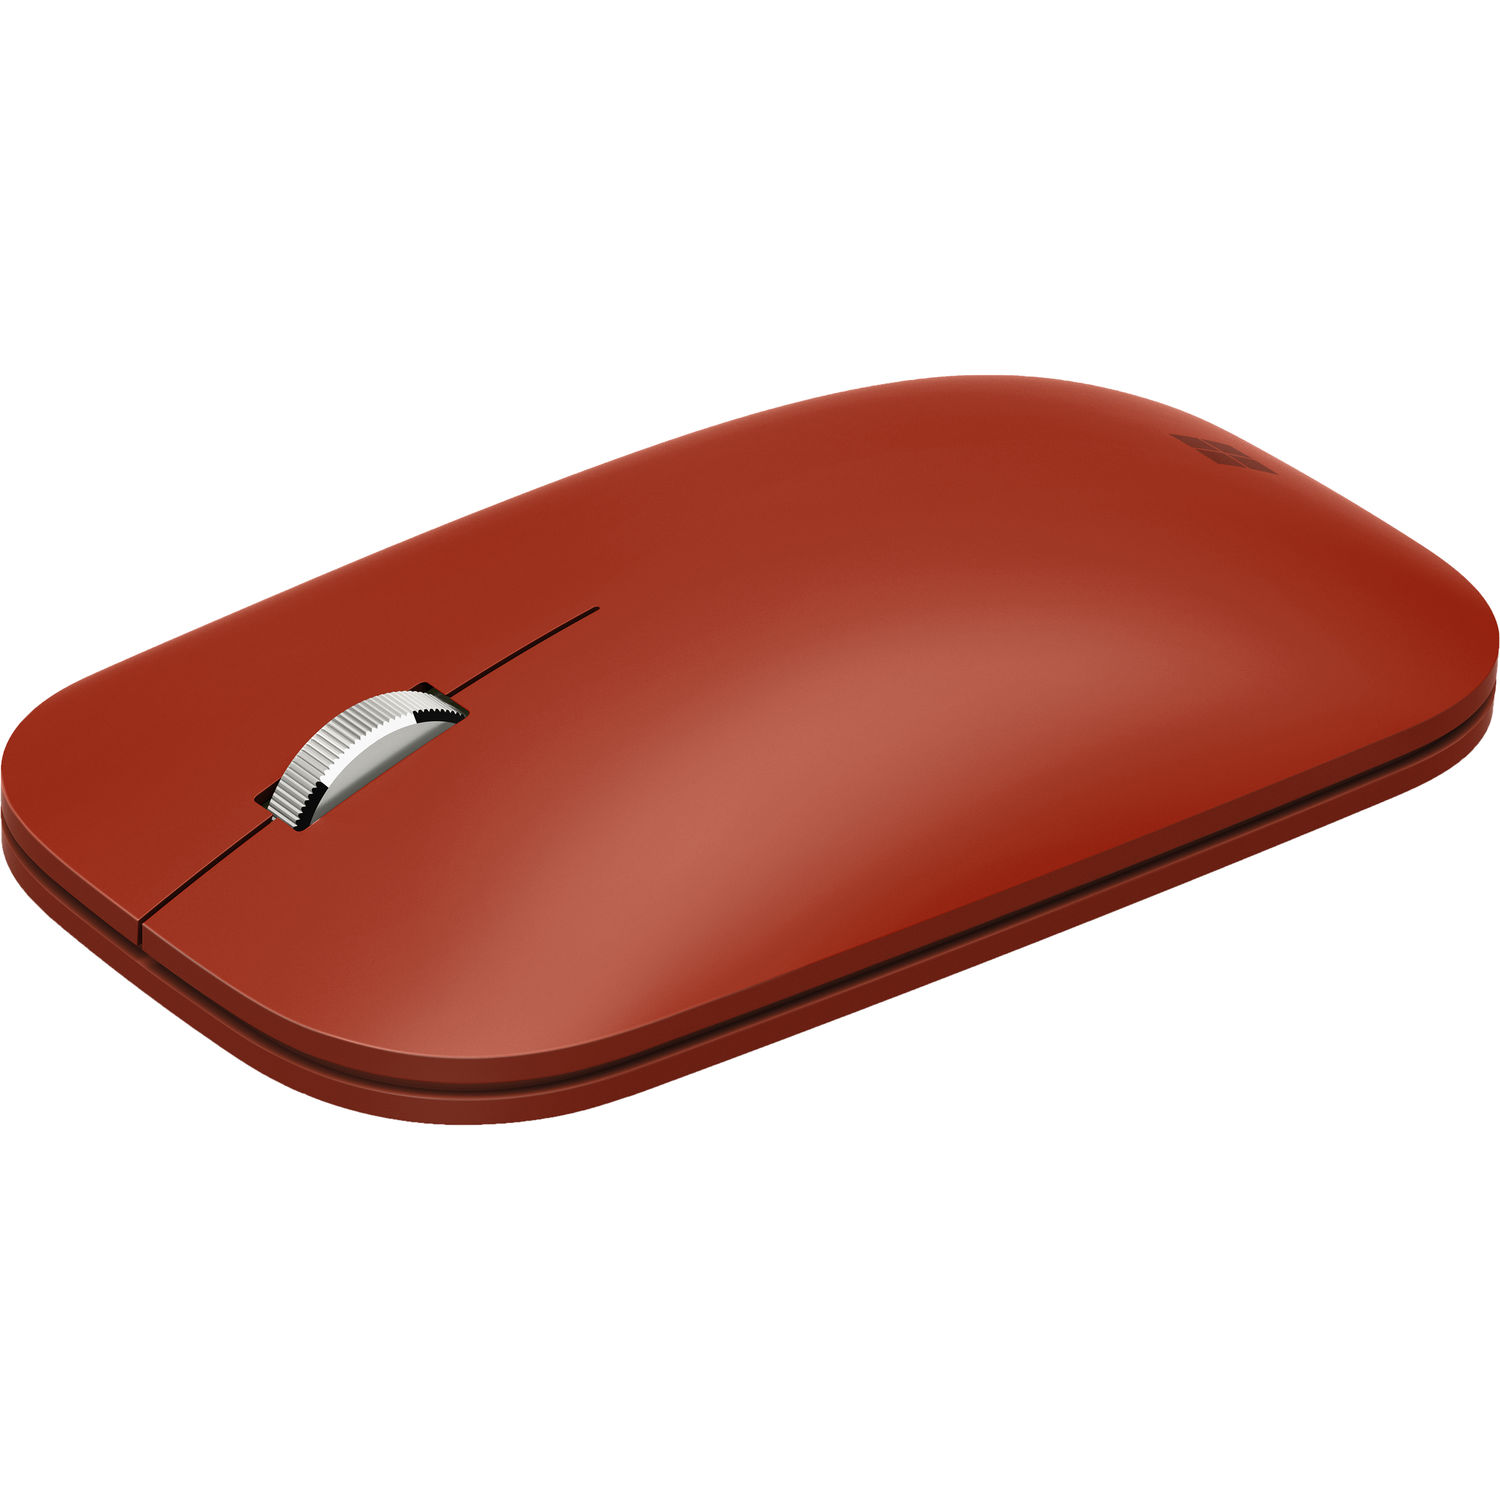 Mouse Microsoft Surface Mobile Rojo Amapola